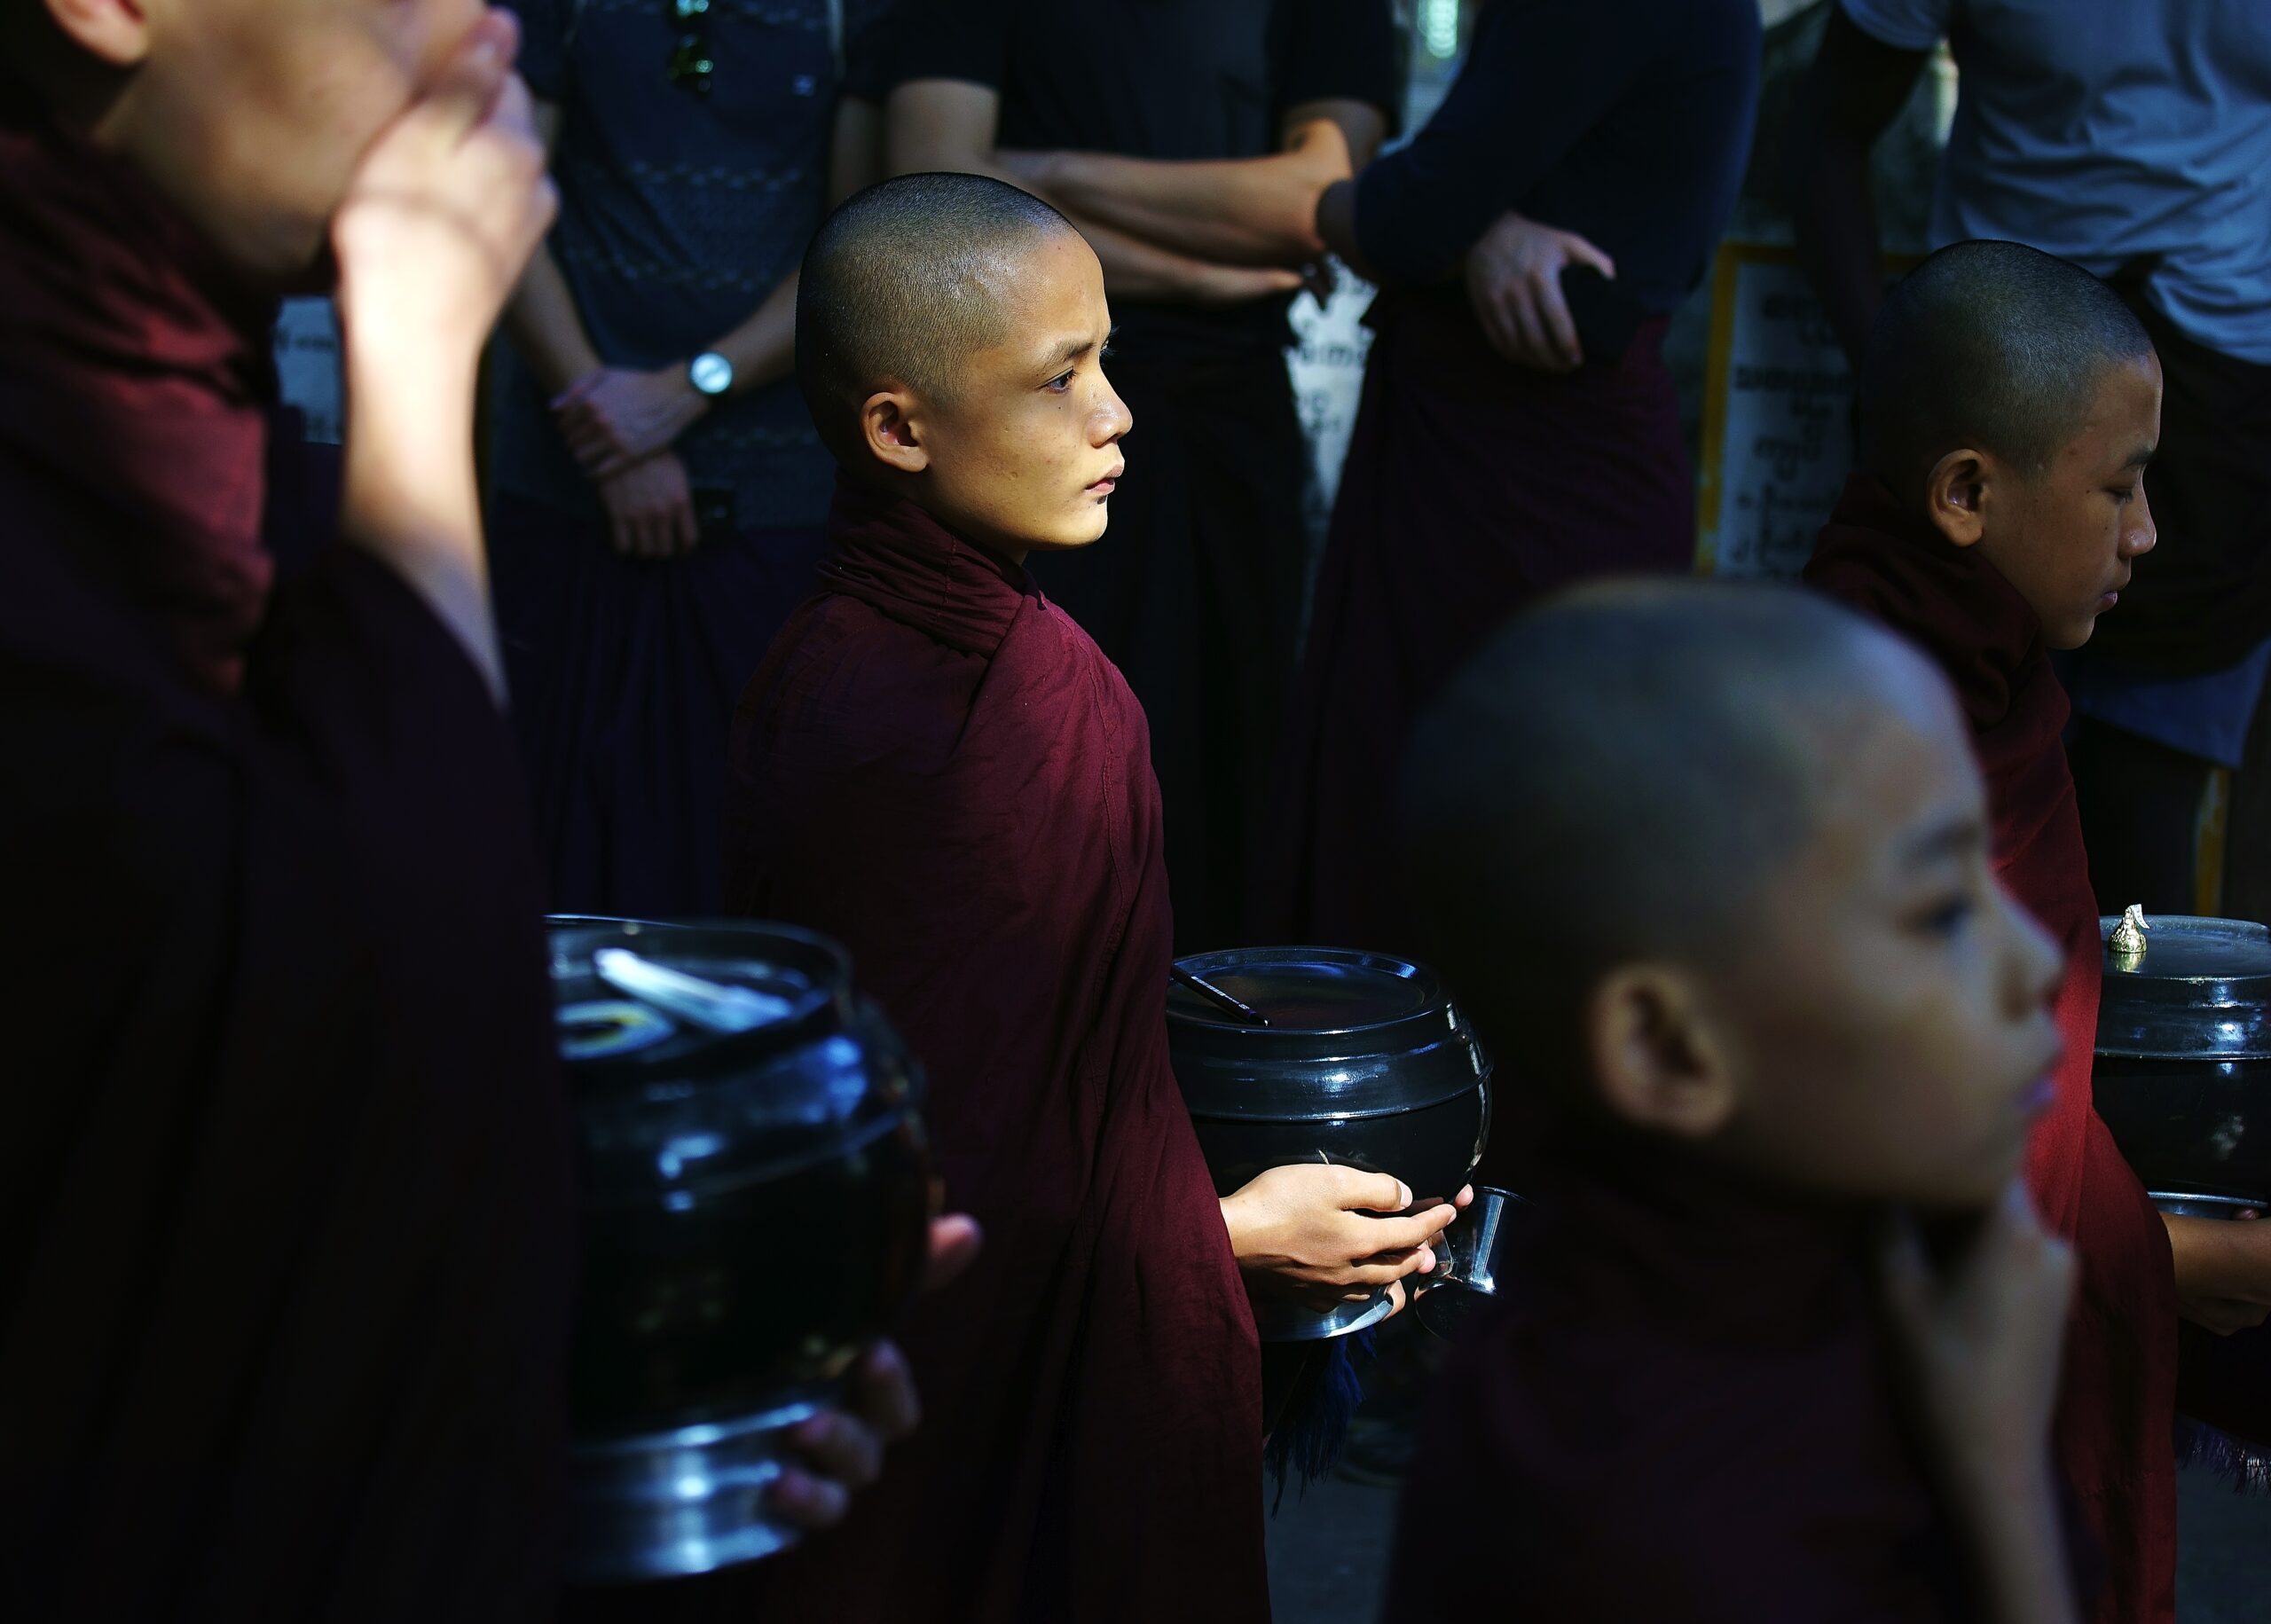 Faith from lunch queue, Mahargandaryone Monastery, Amarapura, Mandalay, Burma (Myanmar)